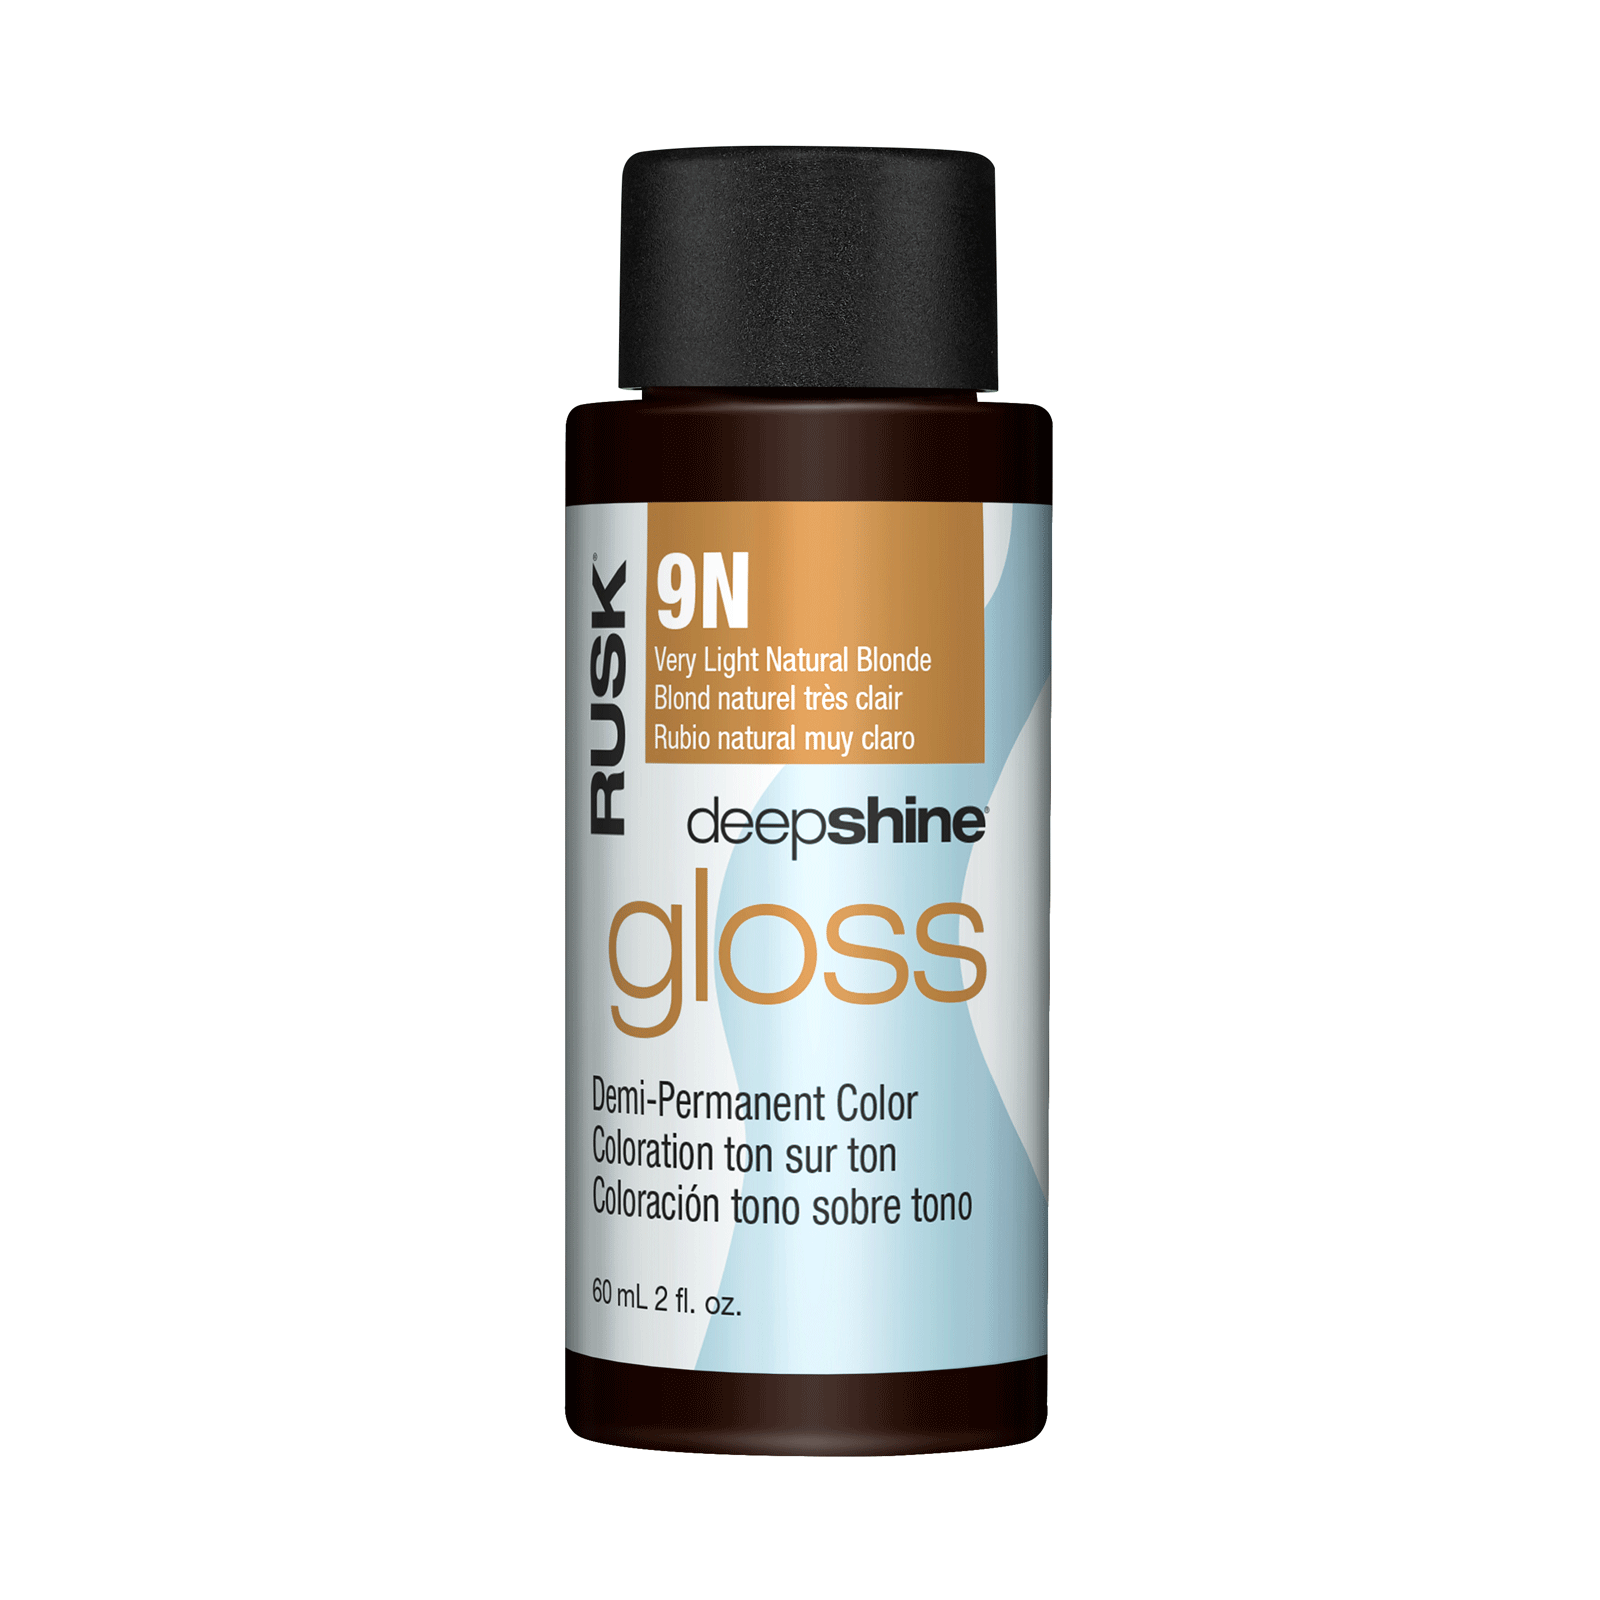 Deepshine Gloss Demi-Permanent Color Collection